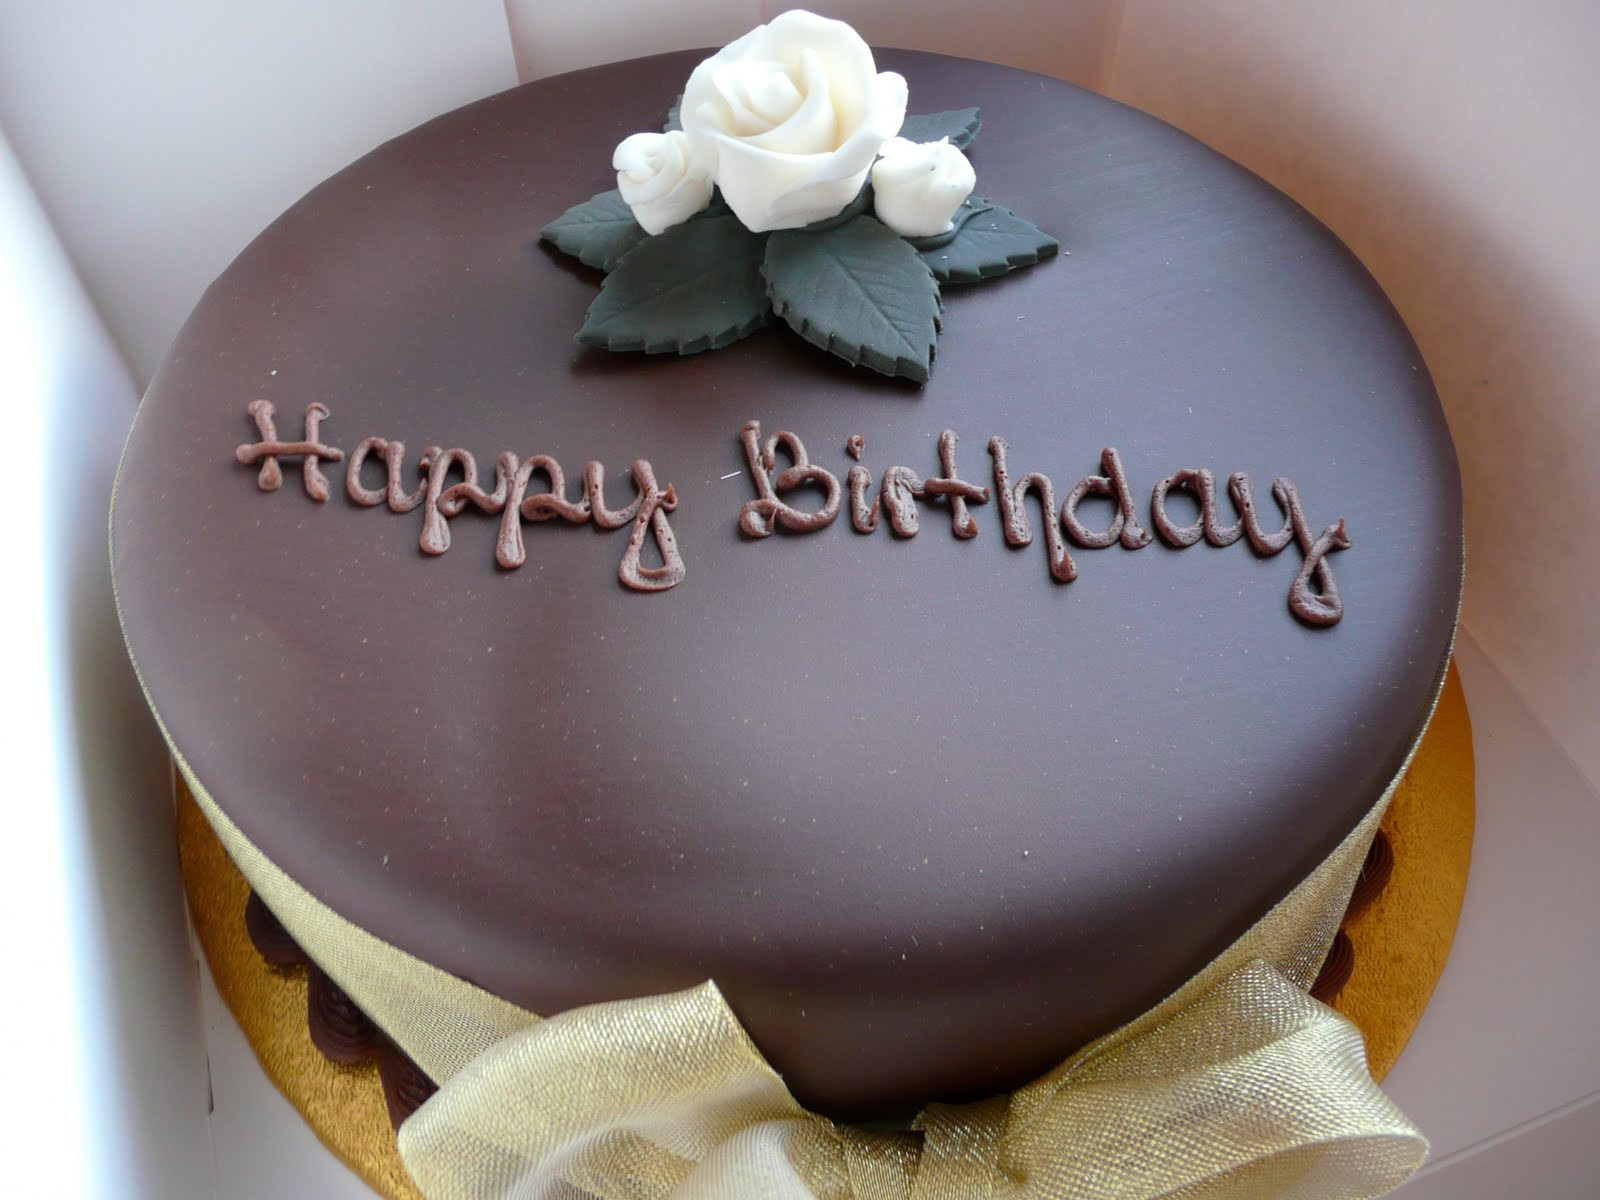 Best ideas about Beautiful Birthday Cake Image
. Save or Pin 32 Most Beautiful Birthday Cakes Now.